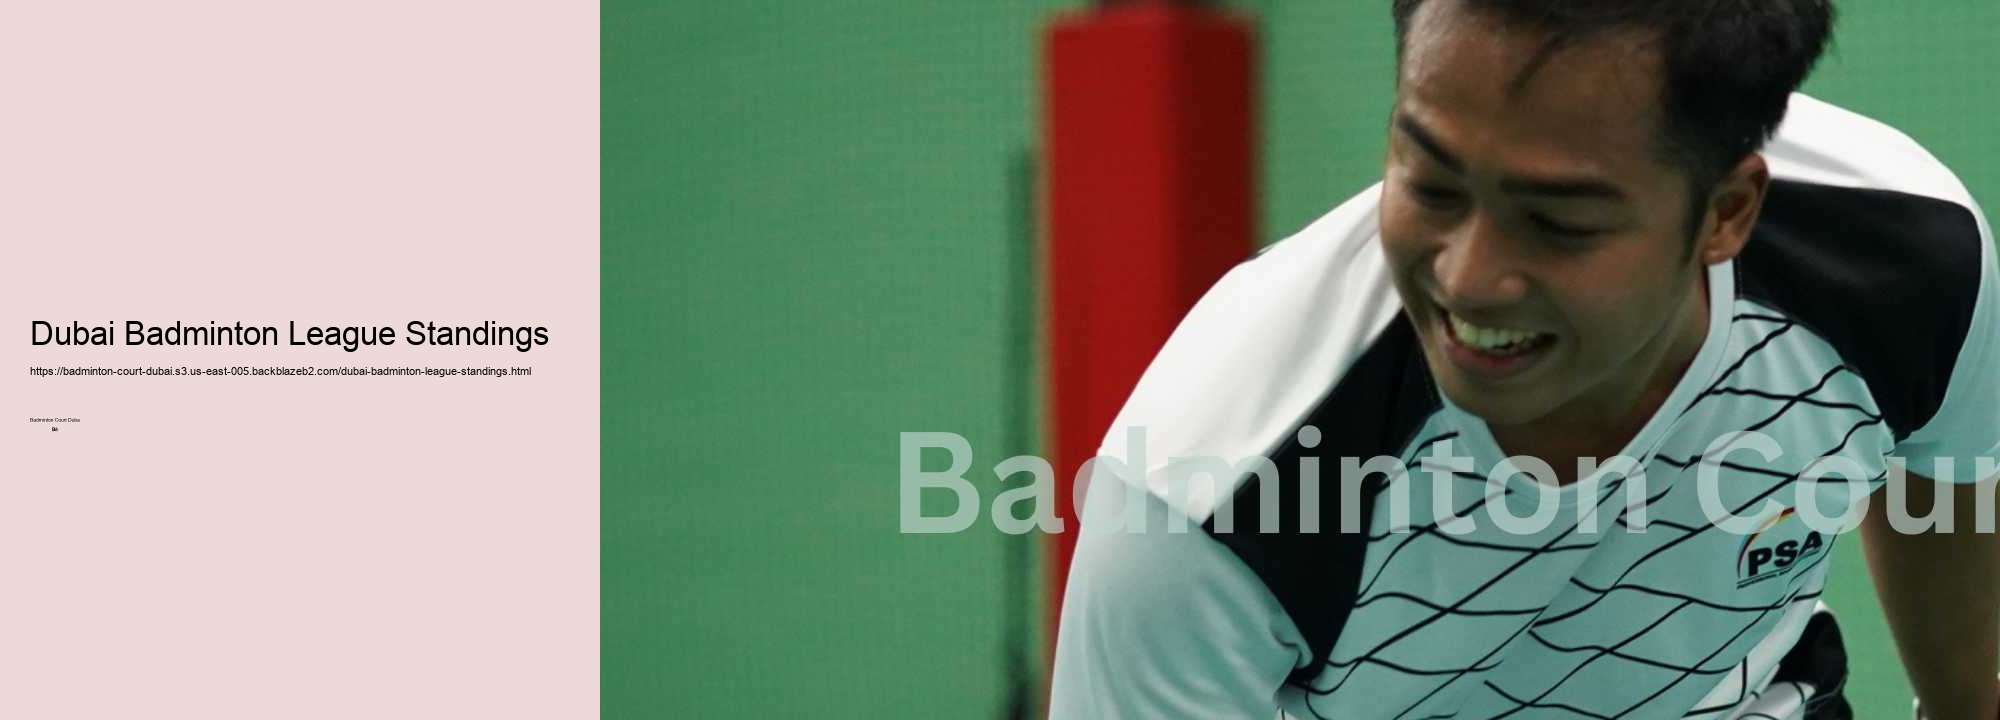 Dubai Badminton League Standings